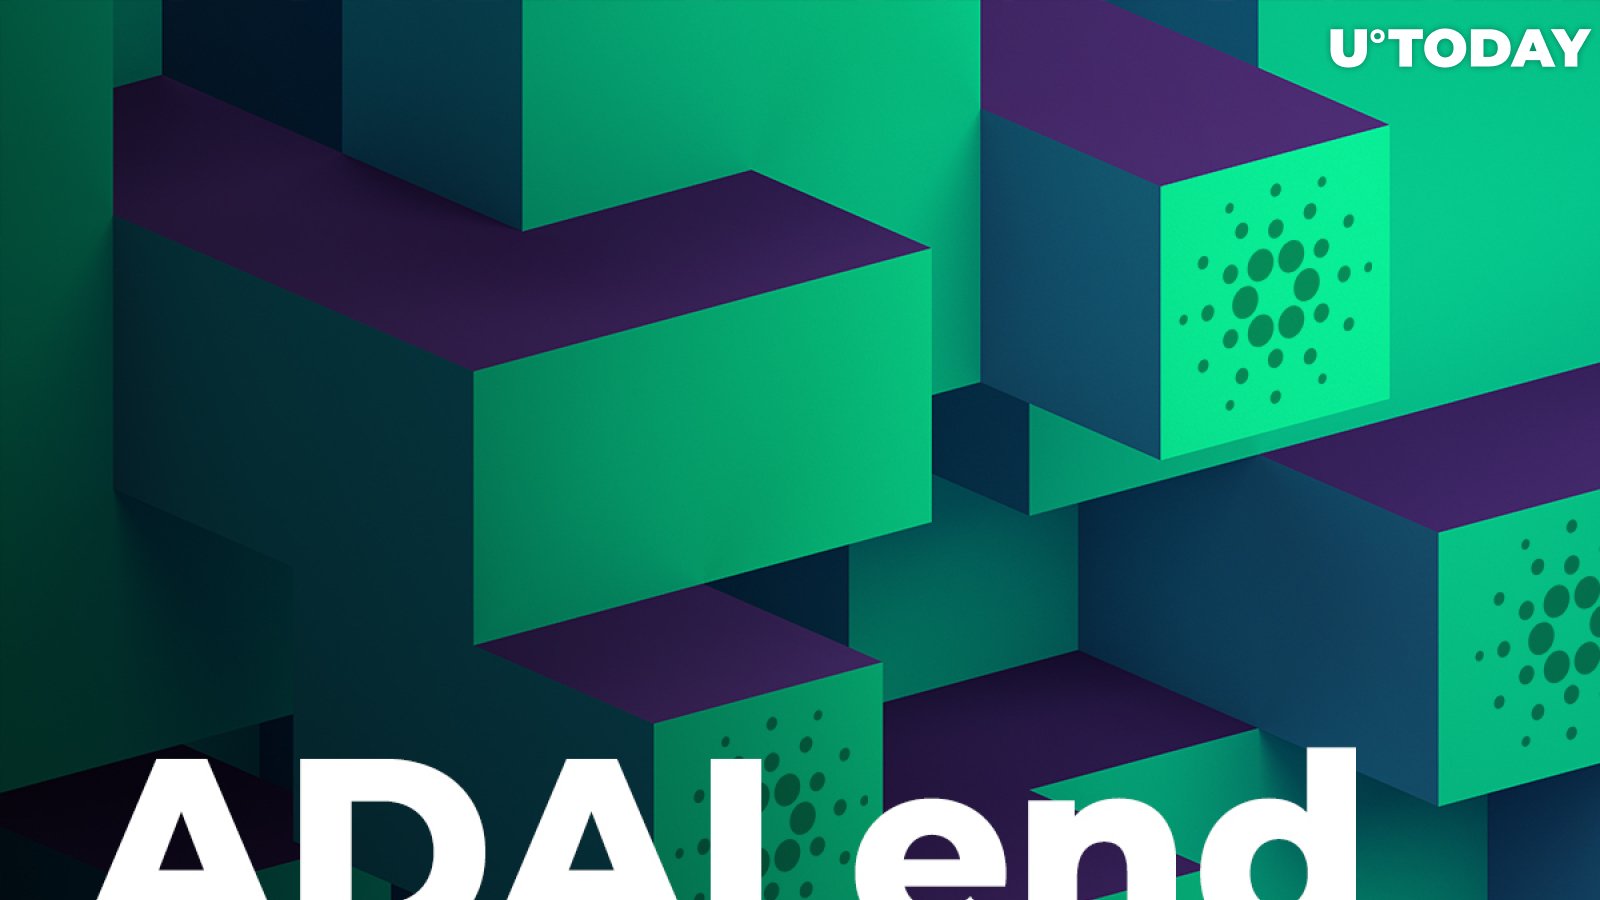 Cardano-based ADALend Pioneers "Green Blockchain" Practices in DeFi